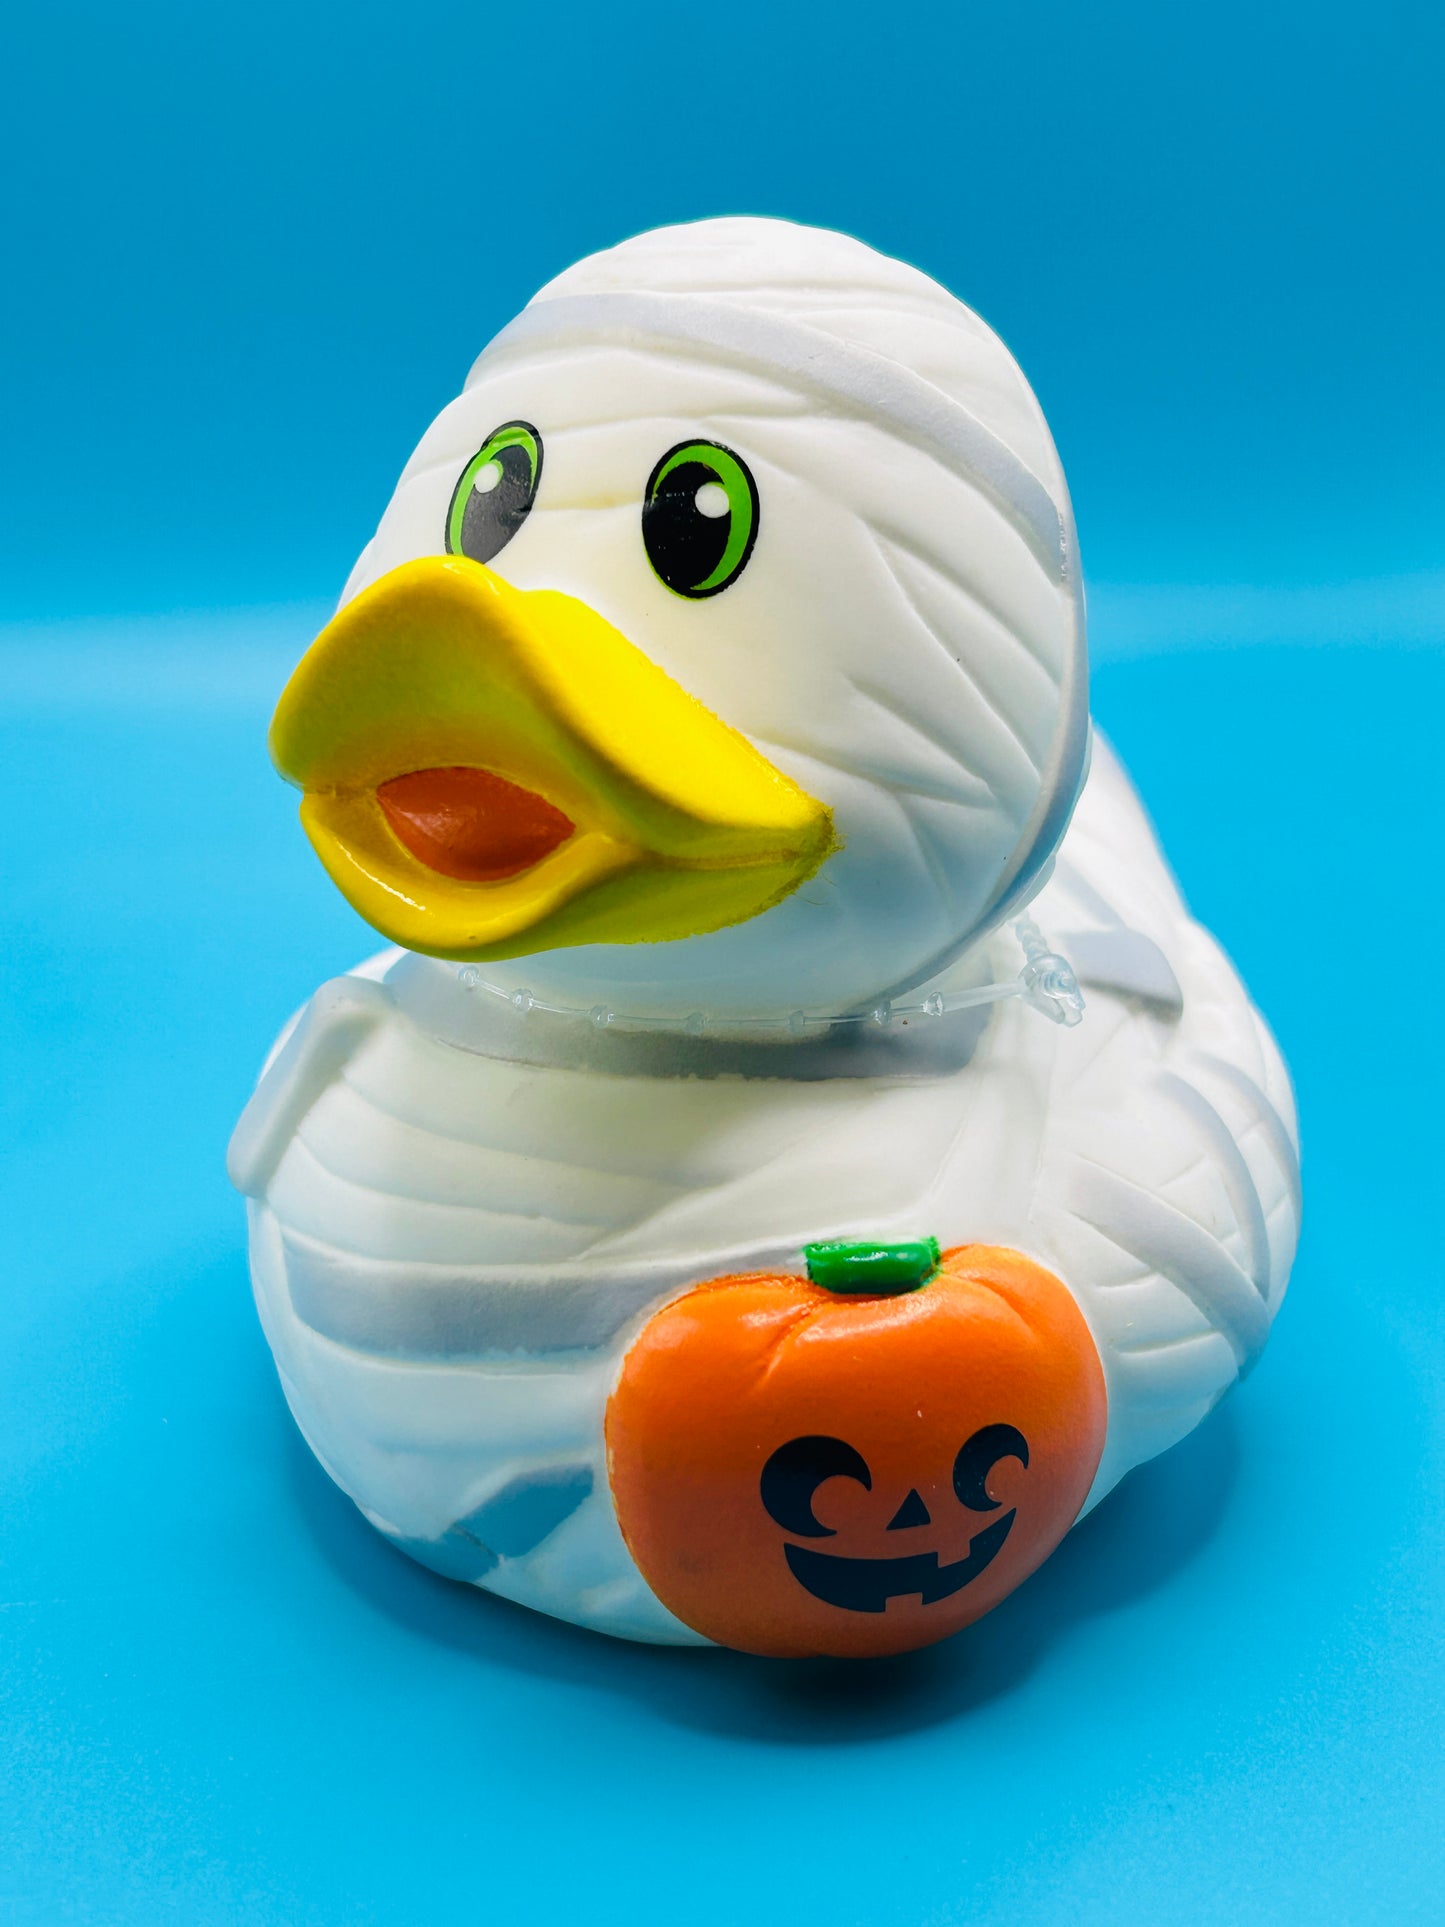 3.5" Halloween Rubber Ducks